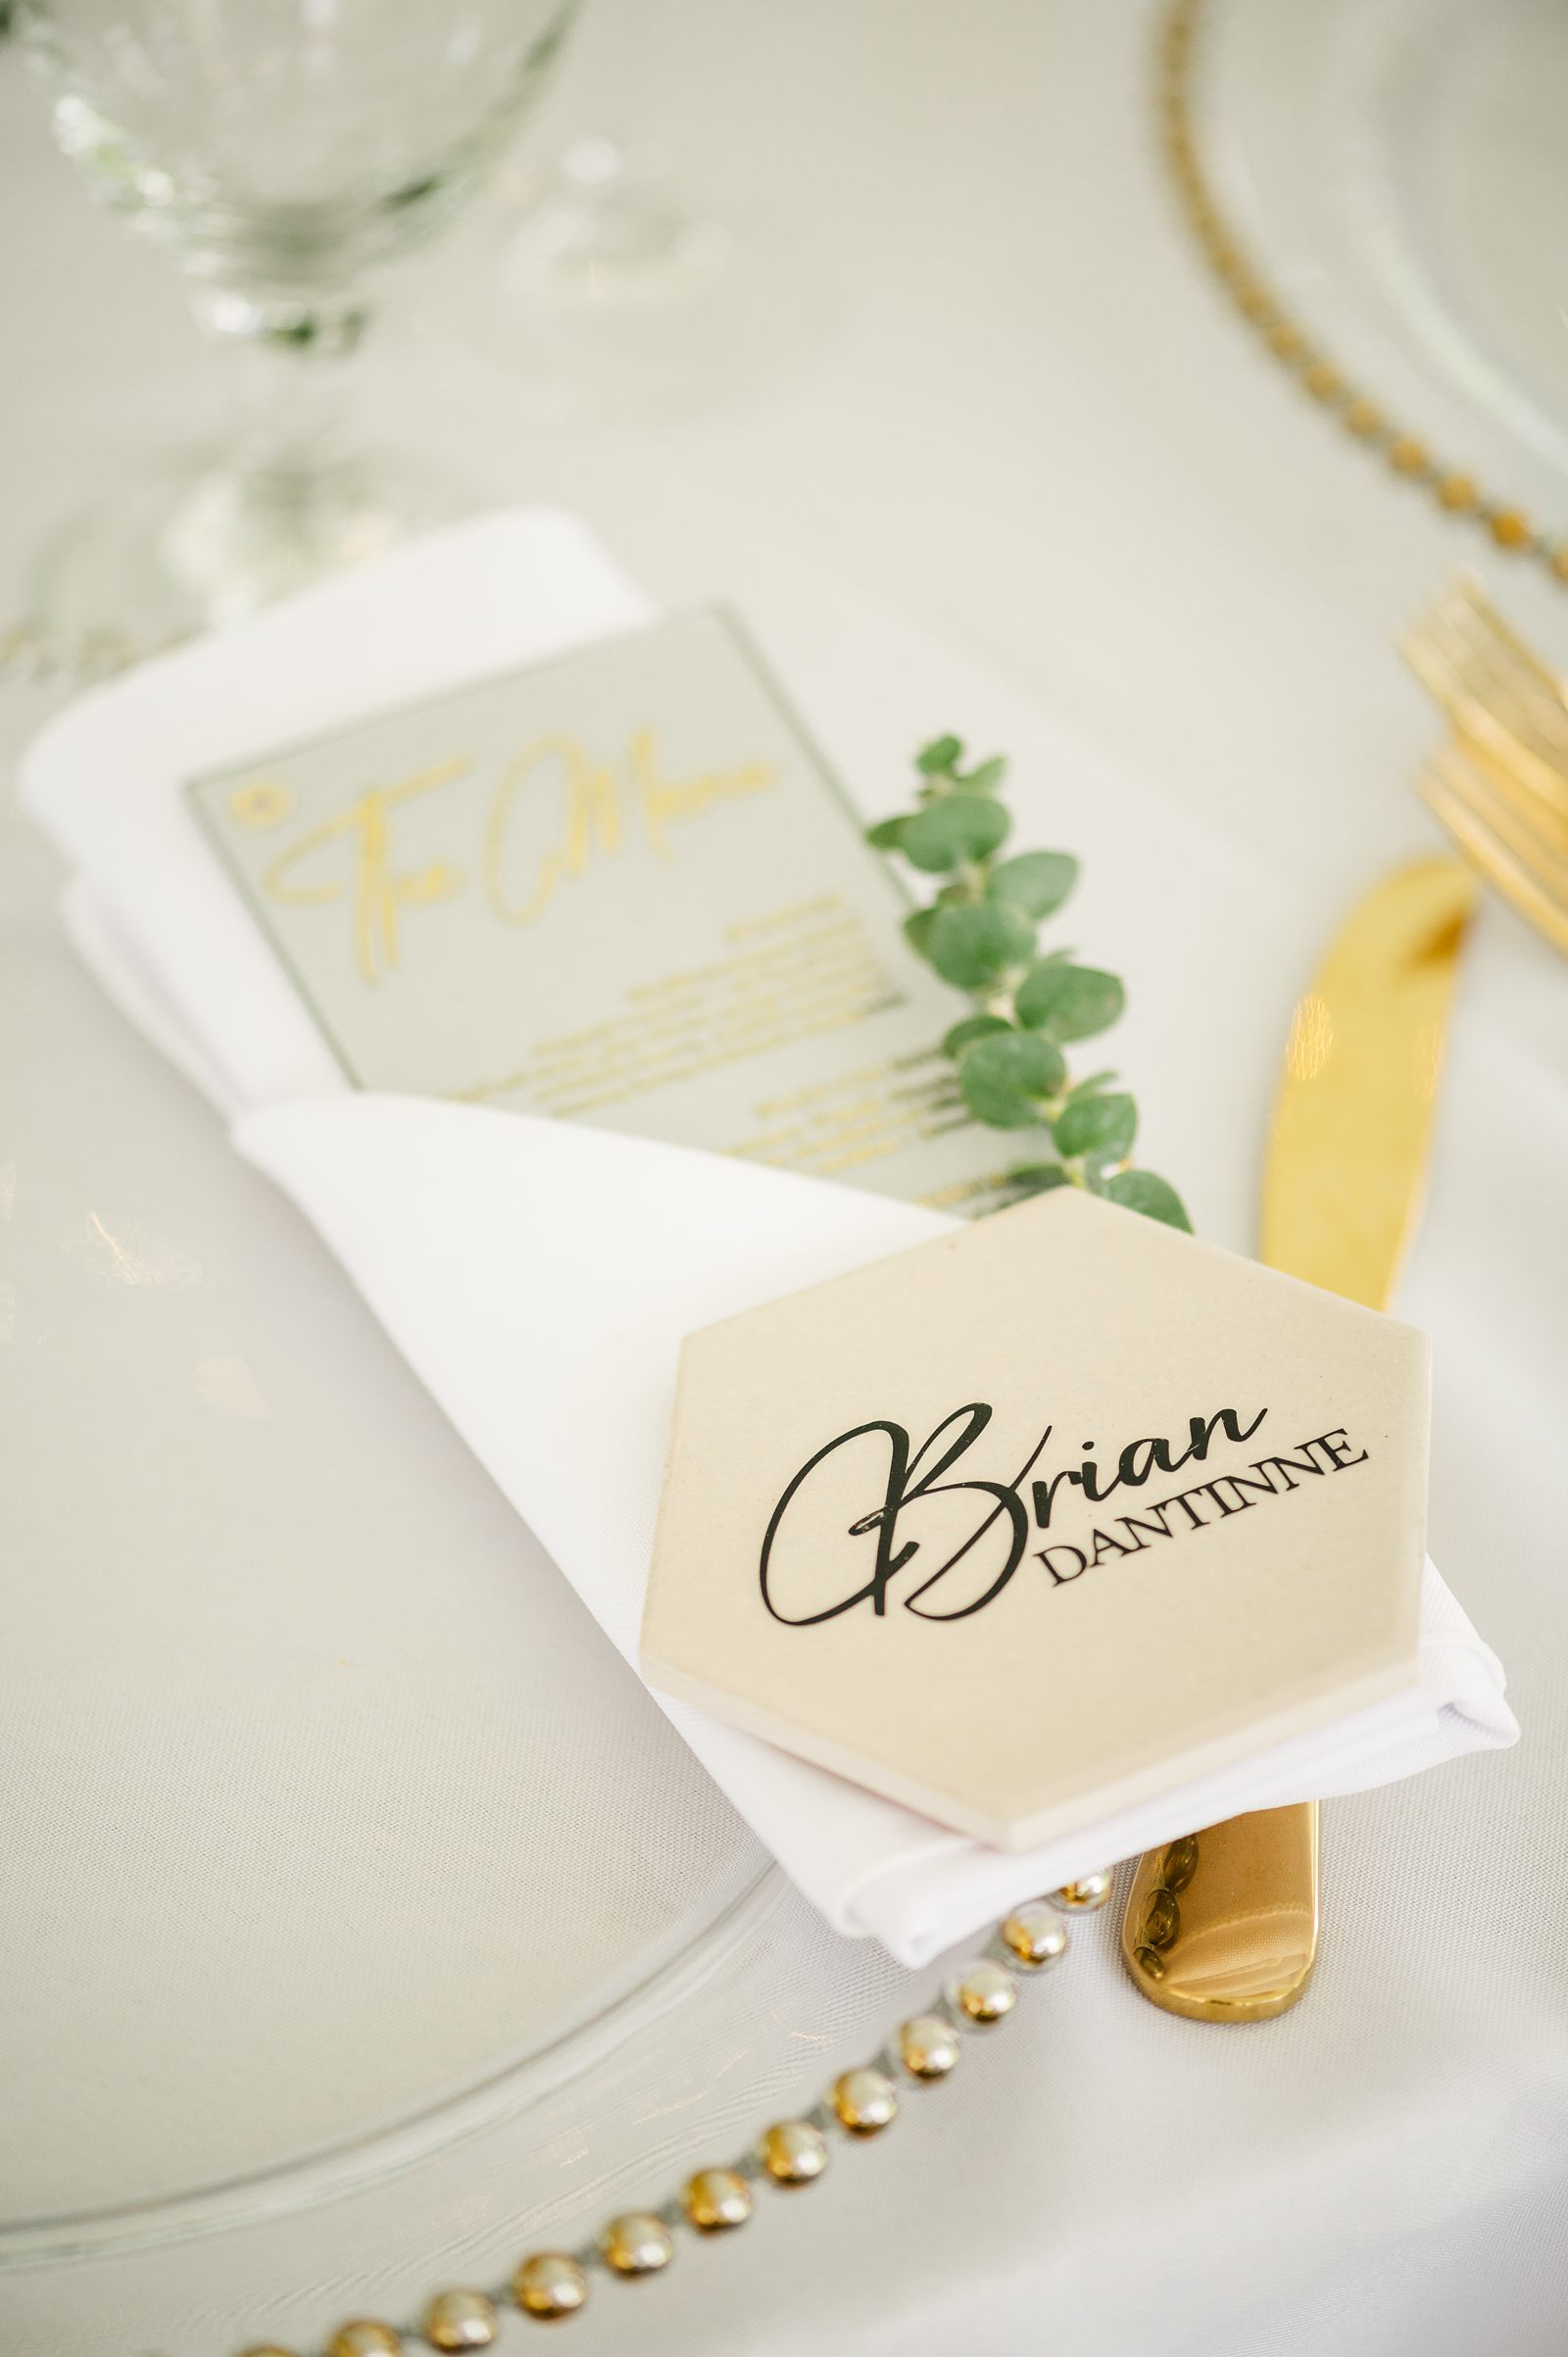 Light and elegant reception decor at spring virginia wedding reception. Custom Name cards and menus 